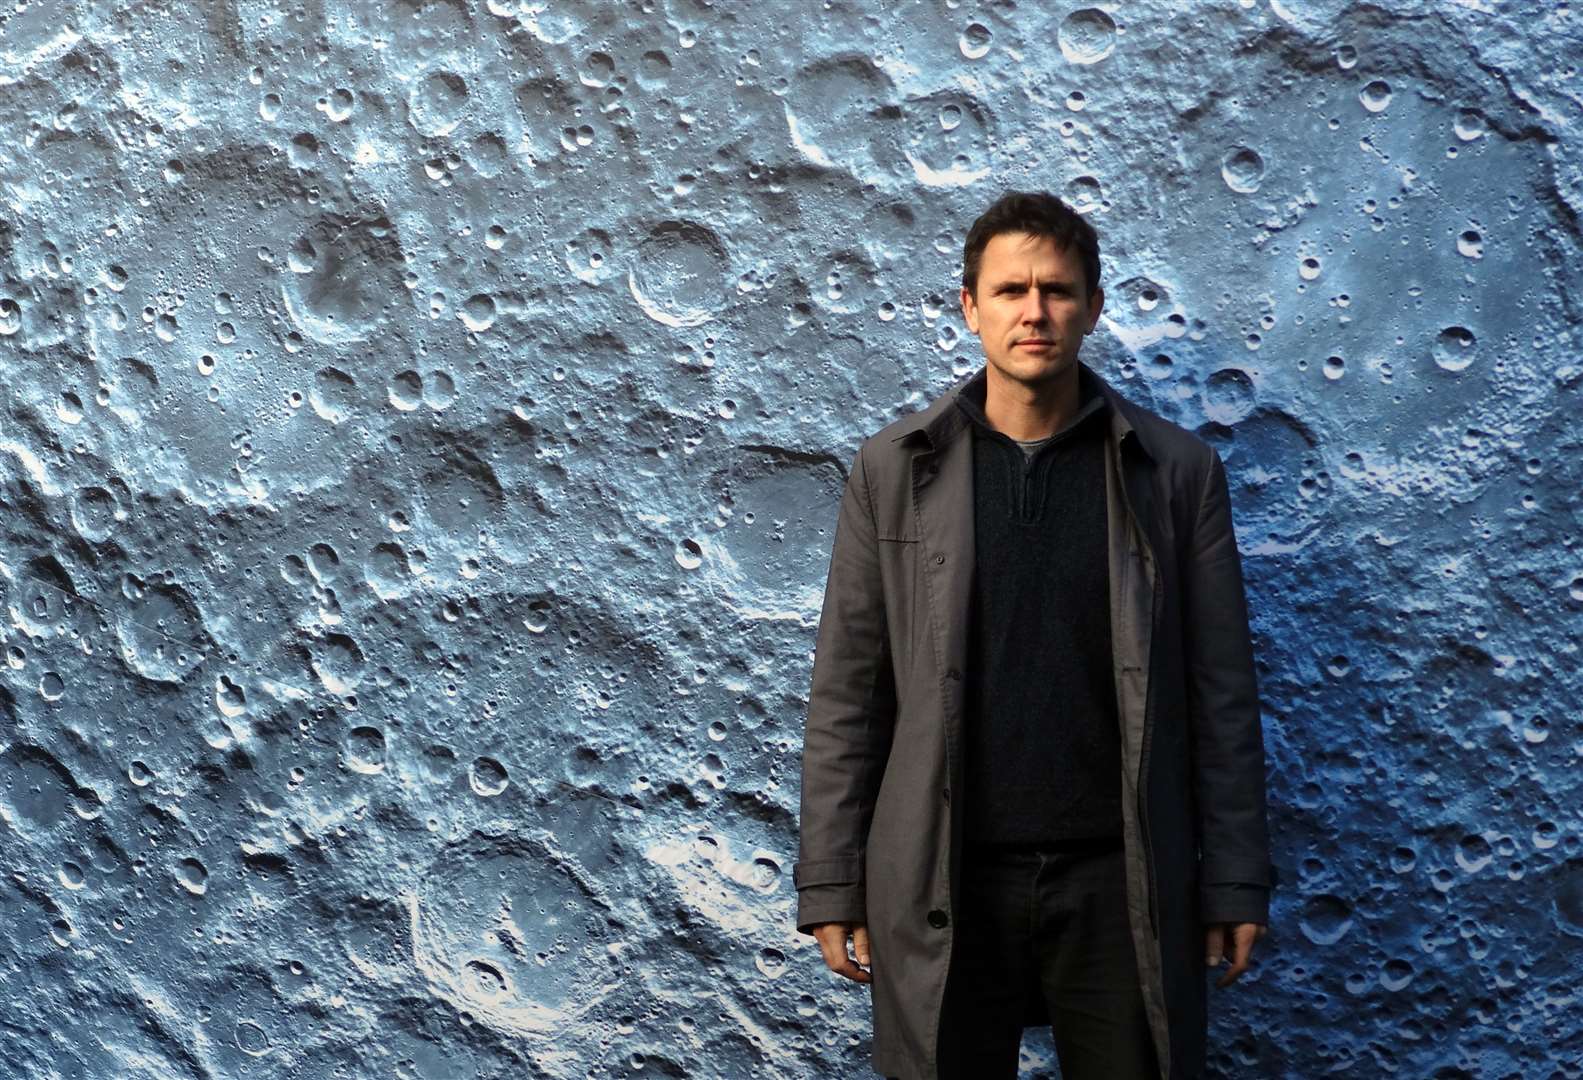 Artist Luke Jerram and his Museum of the Moon